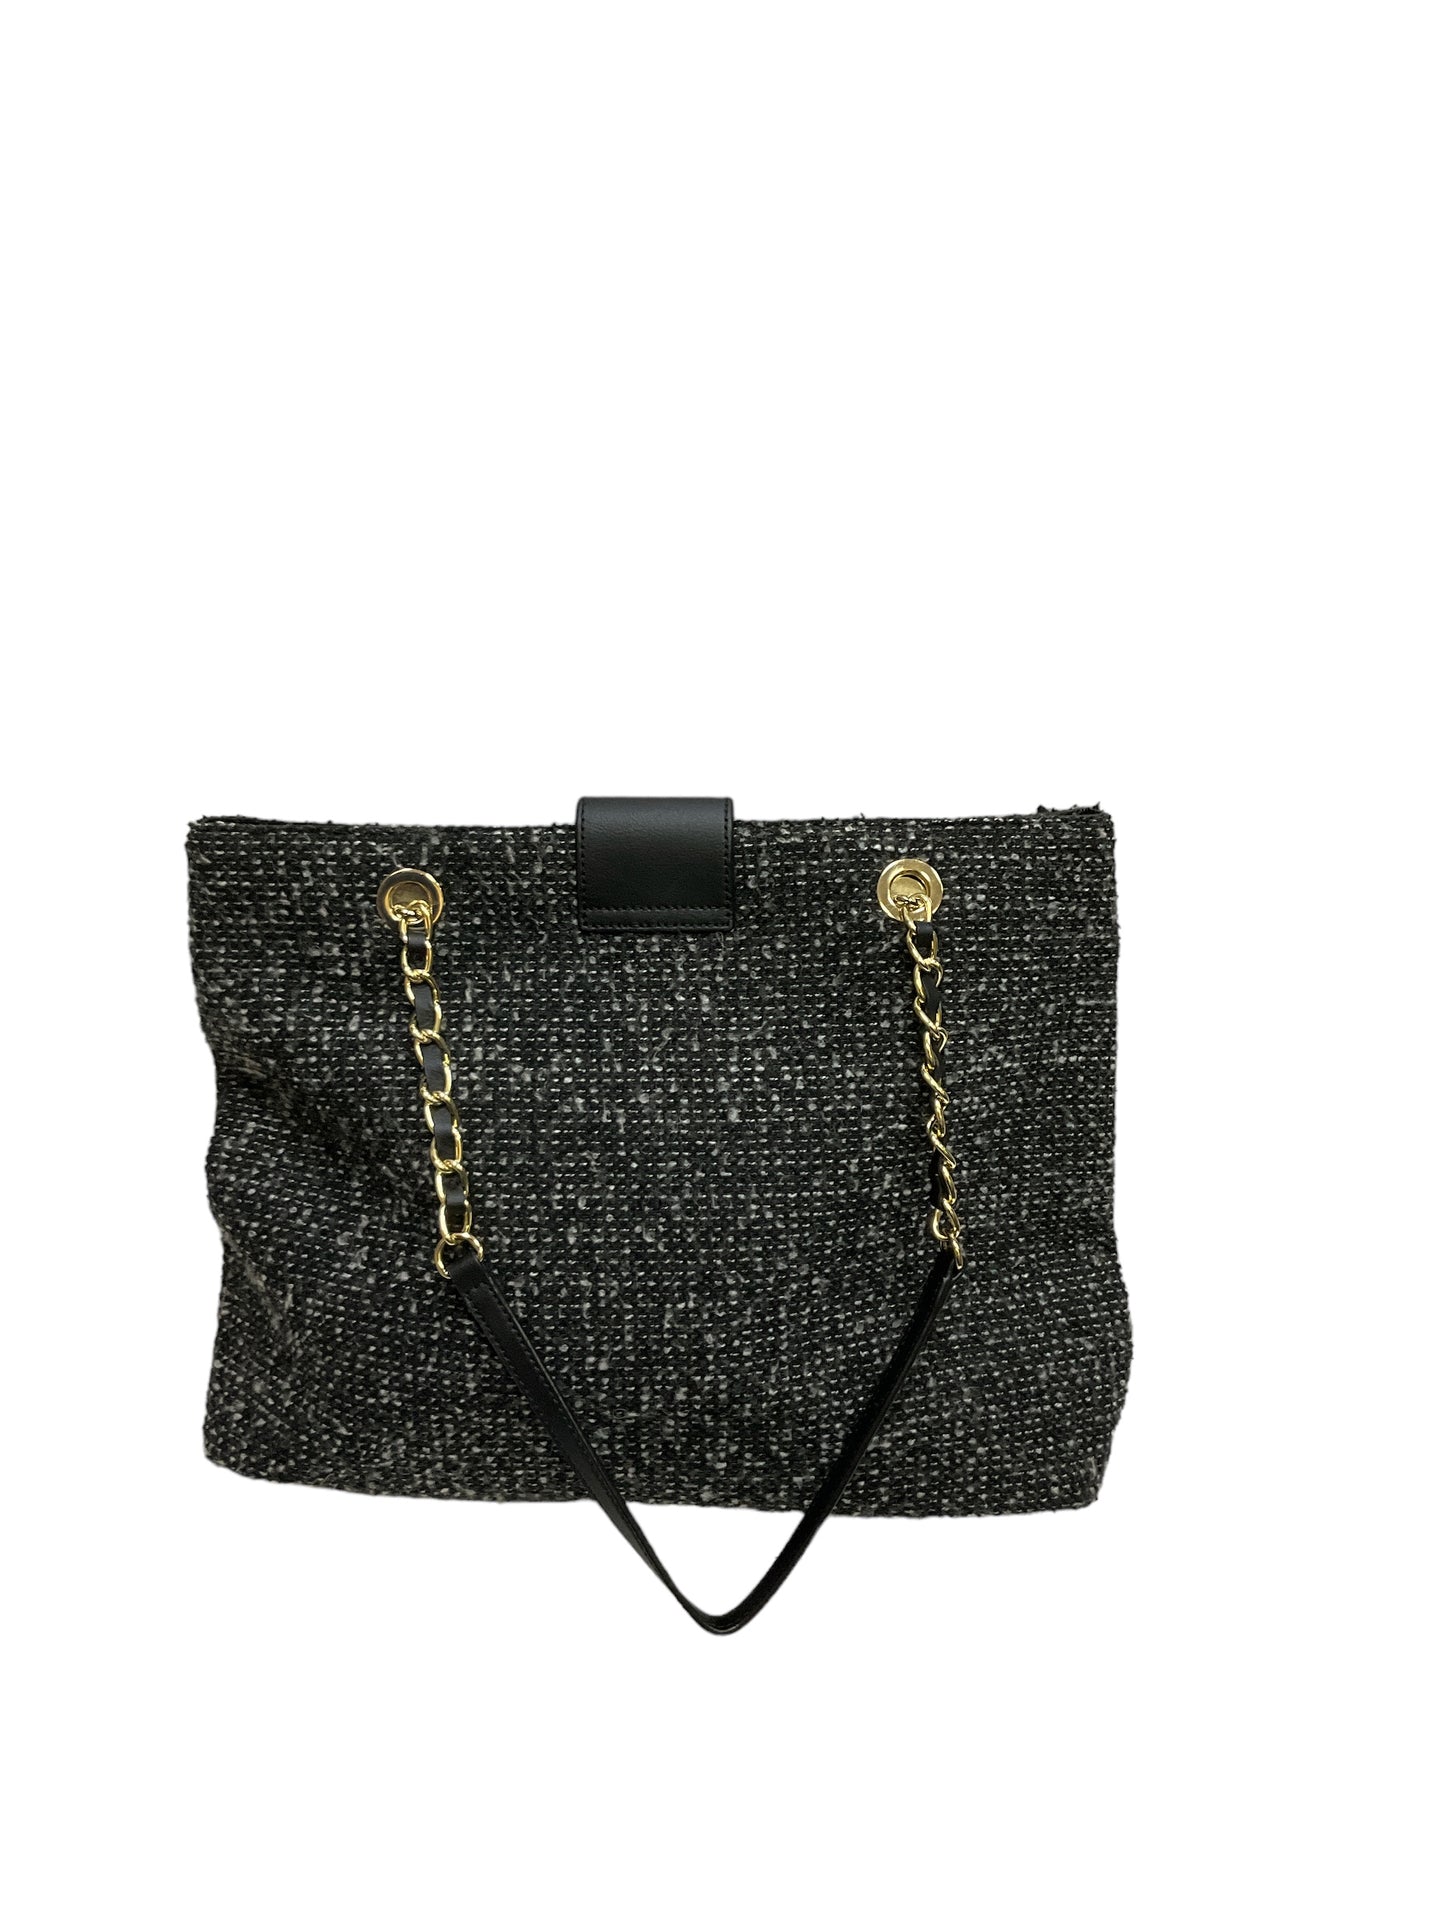 Handbag By Talbots O  Size: Large